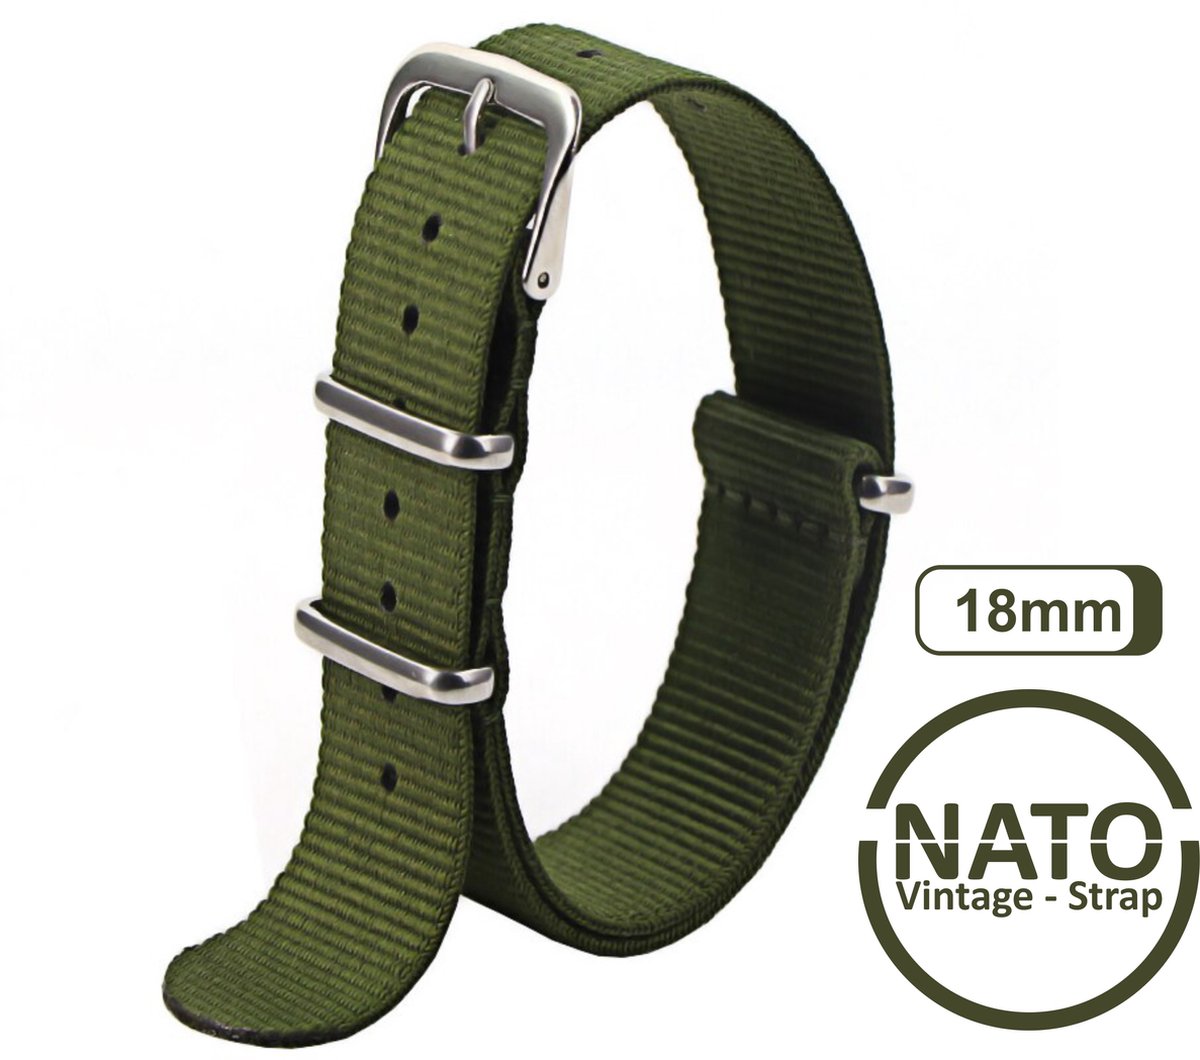 18mm Nato Strap Leger Groen - Vintage James Bond - Nato Strap collectie - Mannen - Horlogebanden - Legergroen - 18 mm bandbreedte voor oa. Seiko Rolex Omega Casio en Citizen